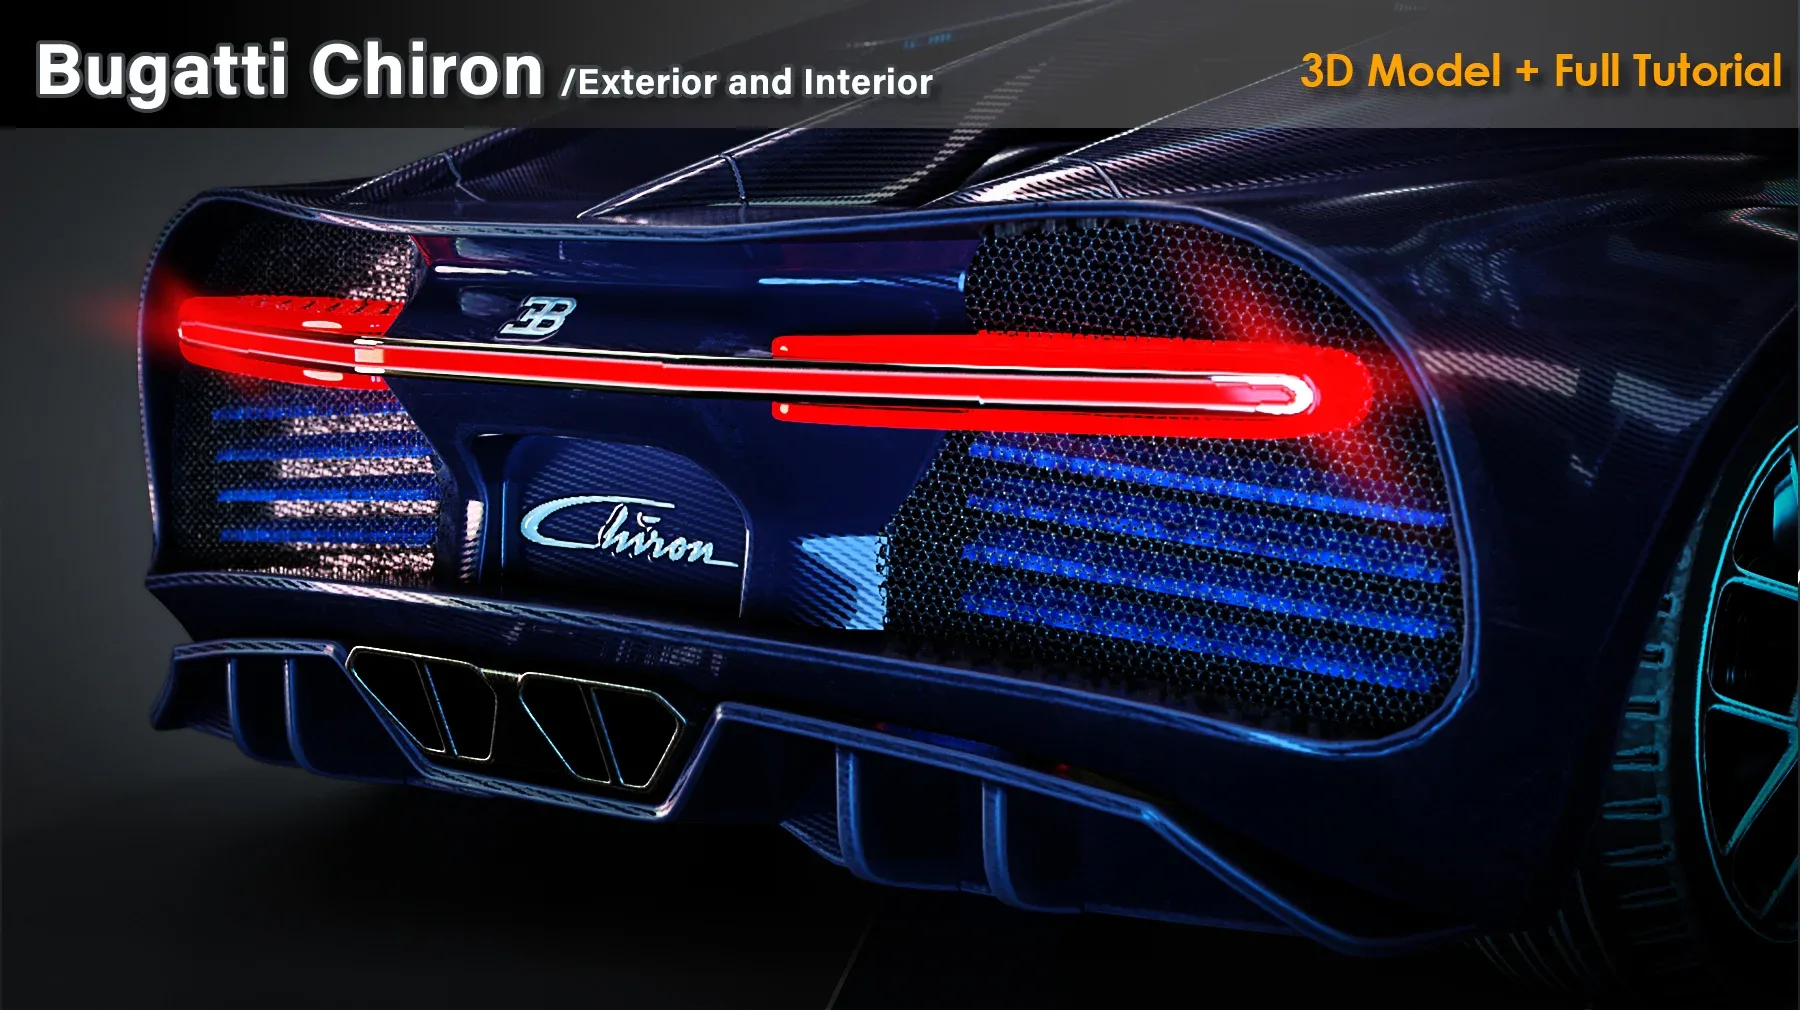 Bugatti Chiron (Exterior and Interior) / 3D  Model + Full Tutorial